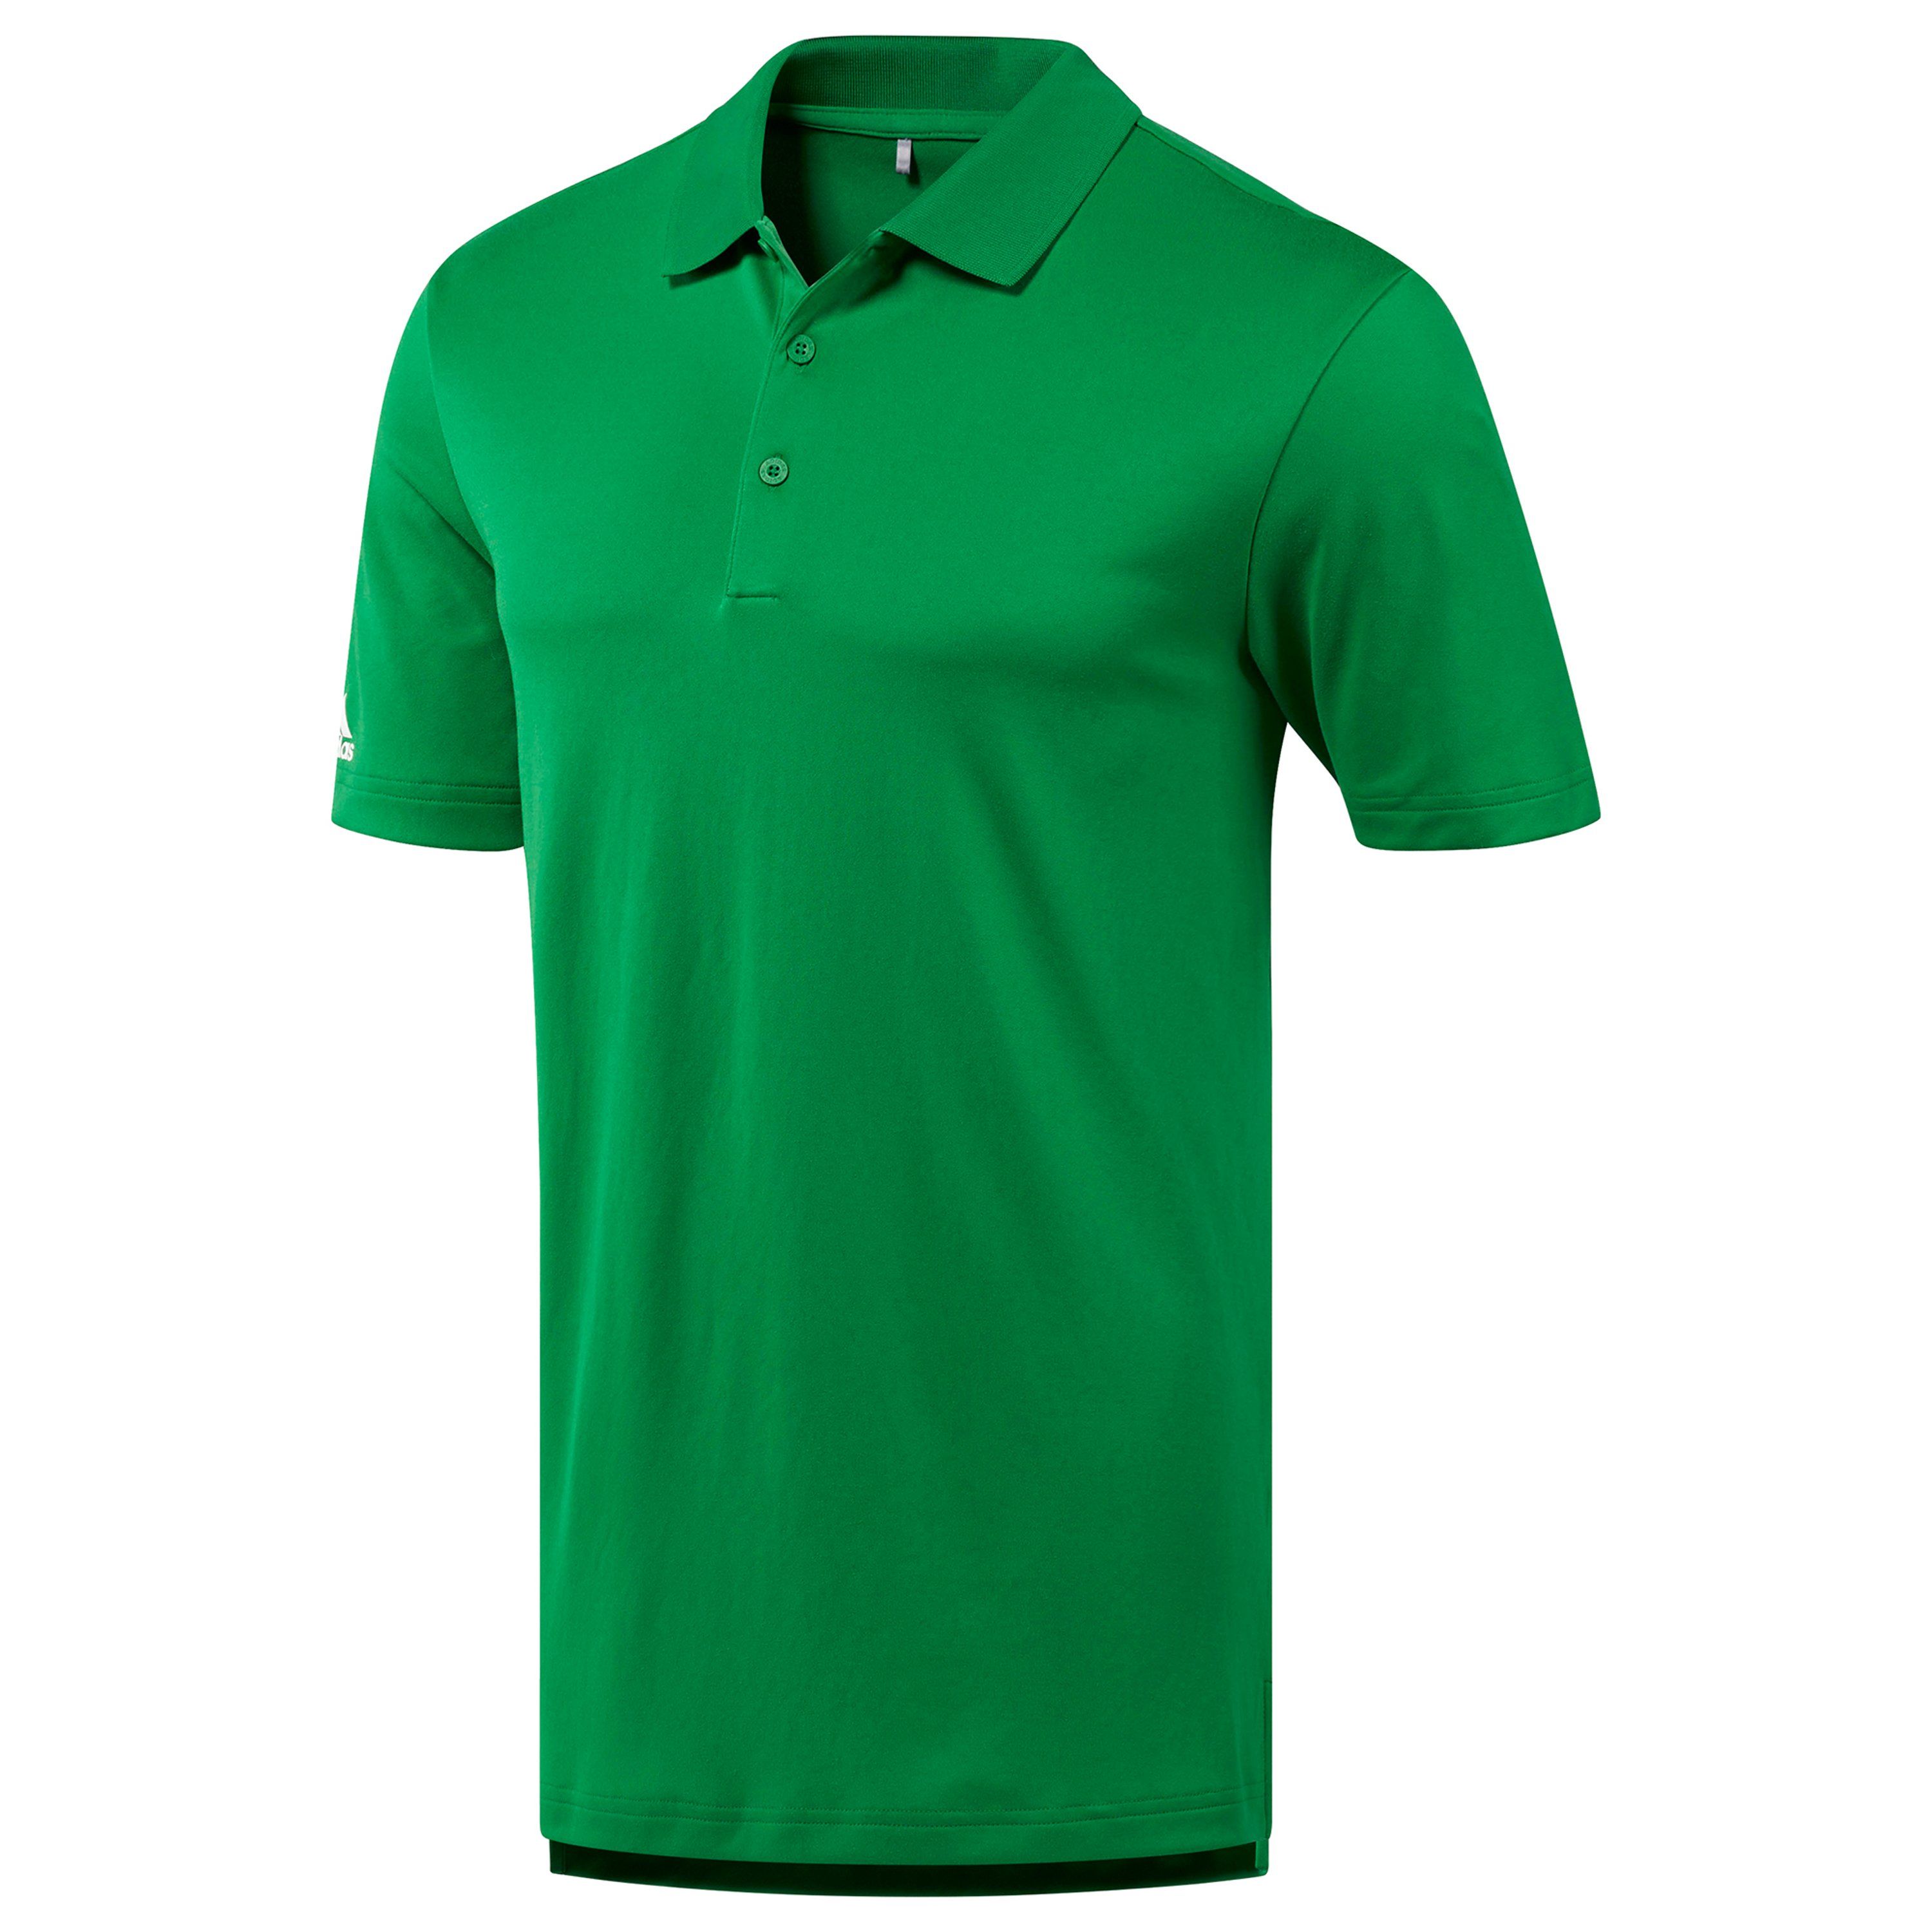 Adidas Mens Performance Polo Shirt (Green) - S - Also in: 2XL, XS, M, XL | Verishop